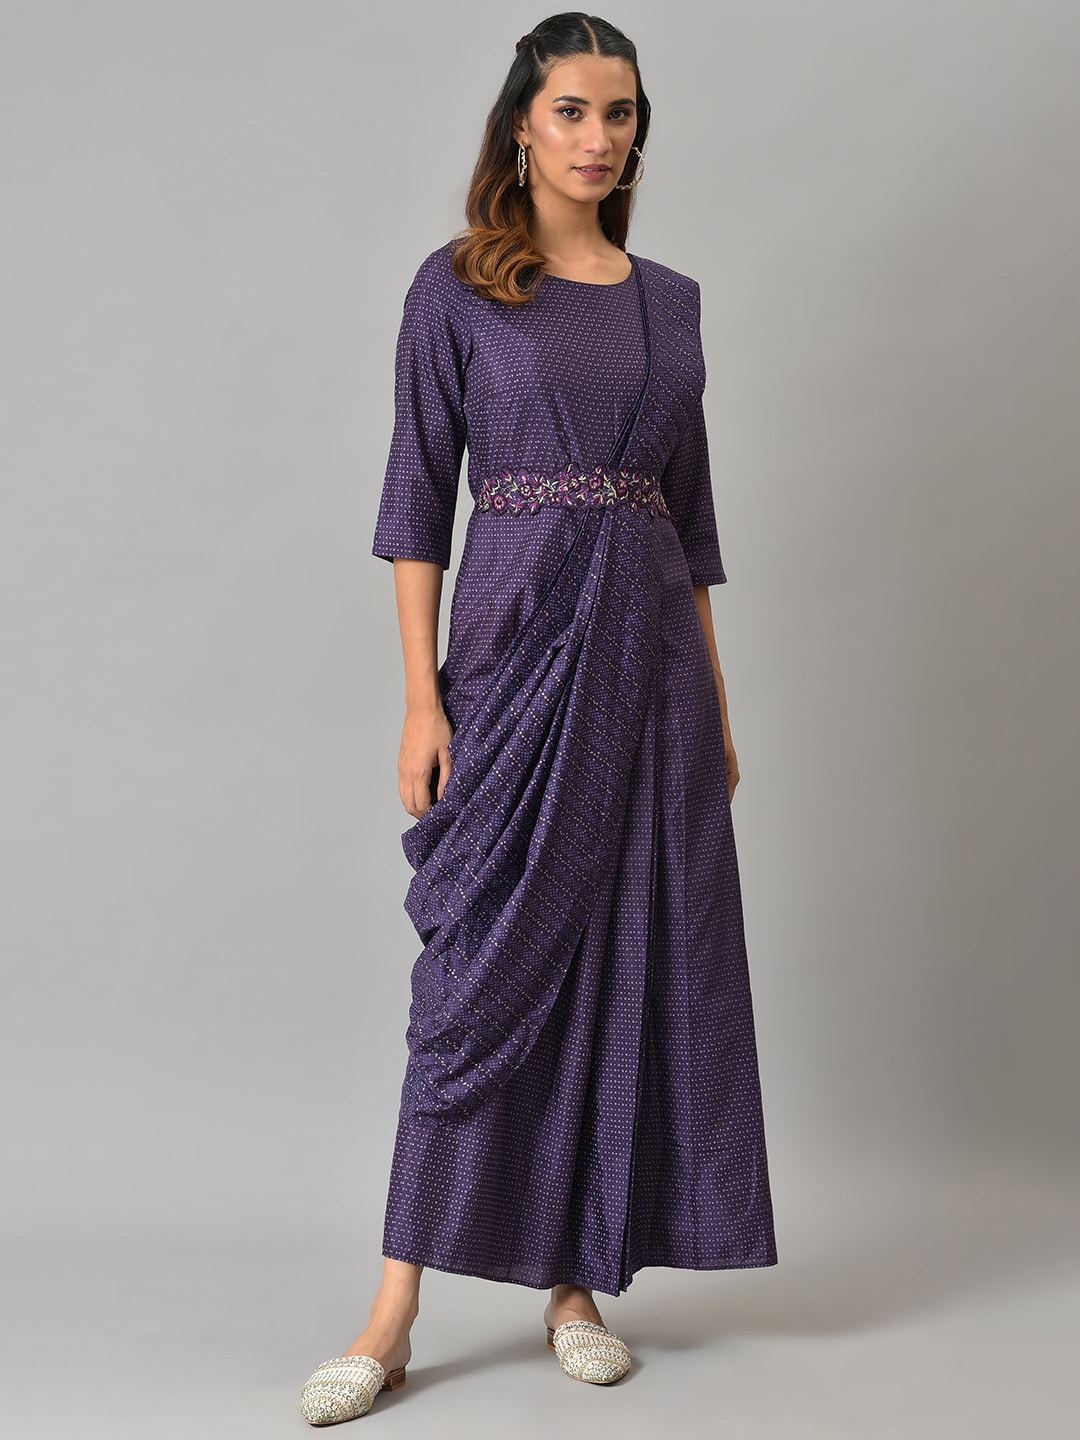 W Purple Printed Ethnic Maxi Dress Price in India